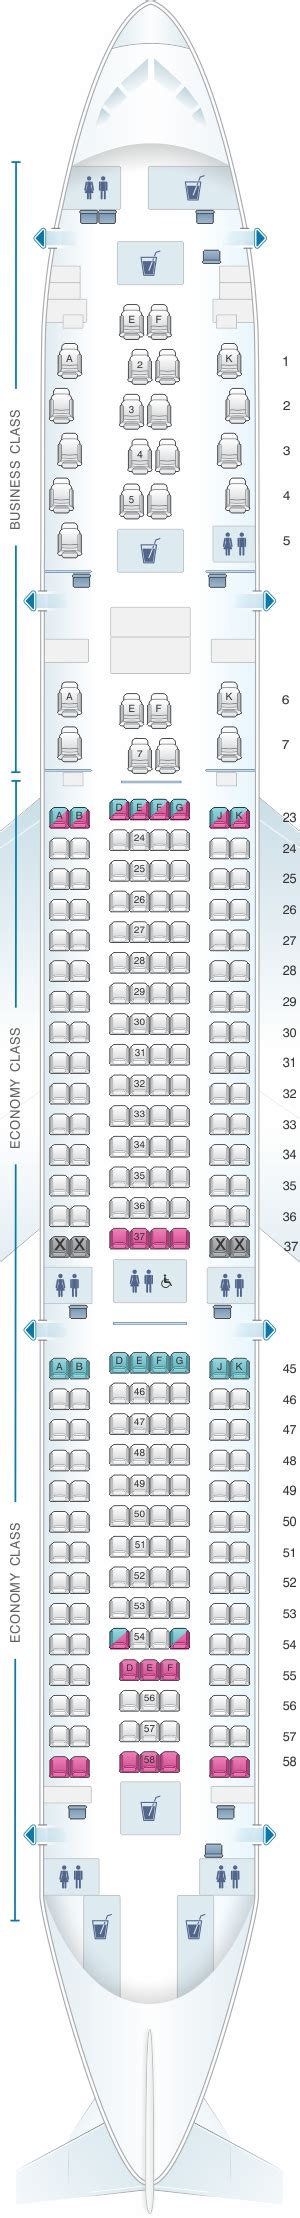 Qantas A Seat Map